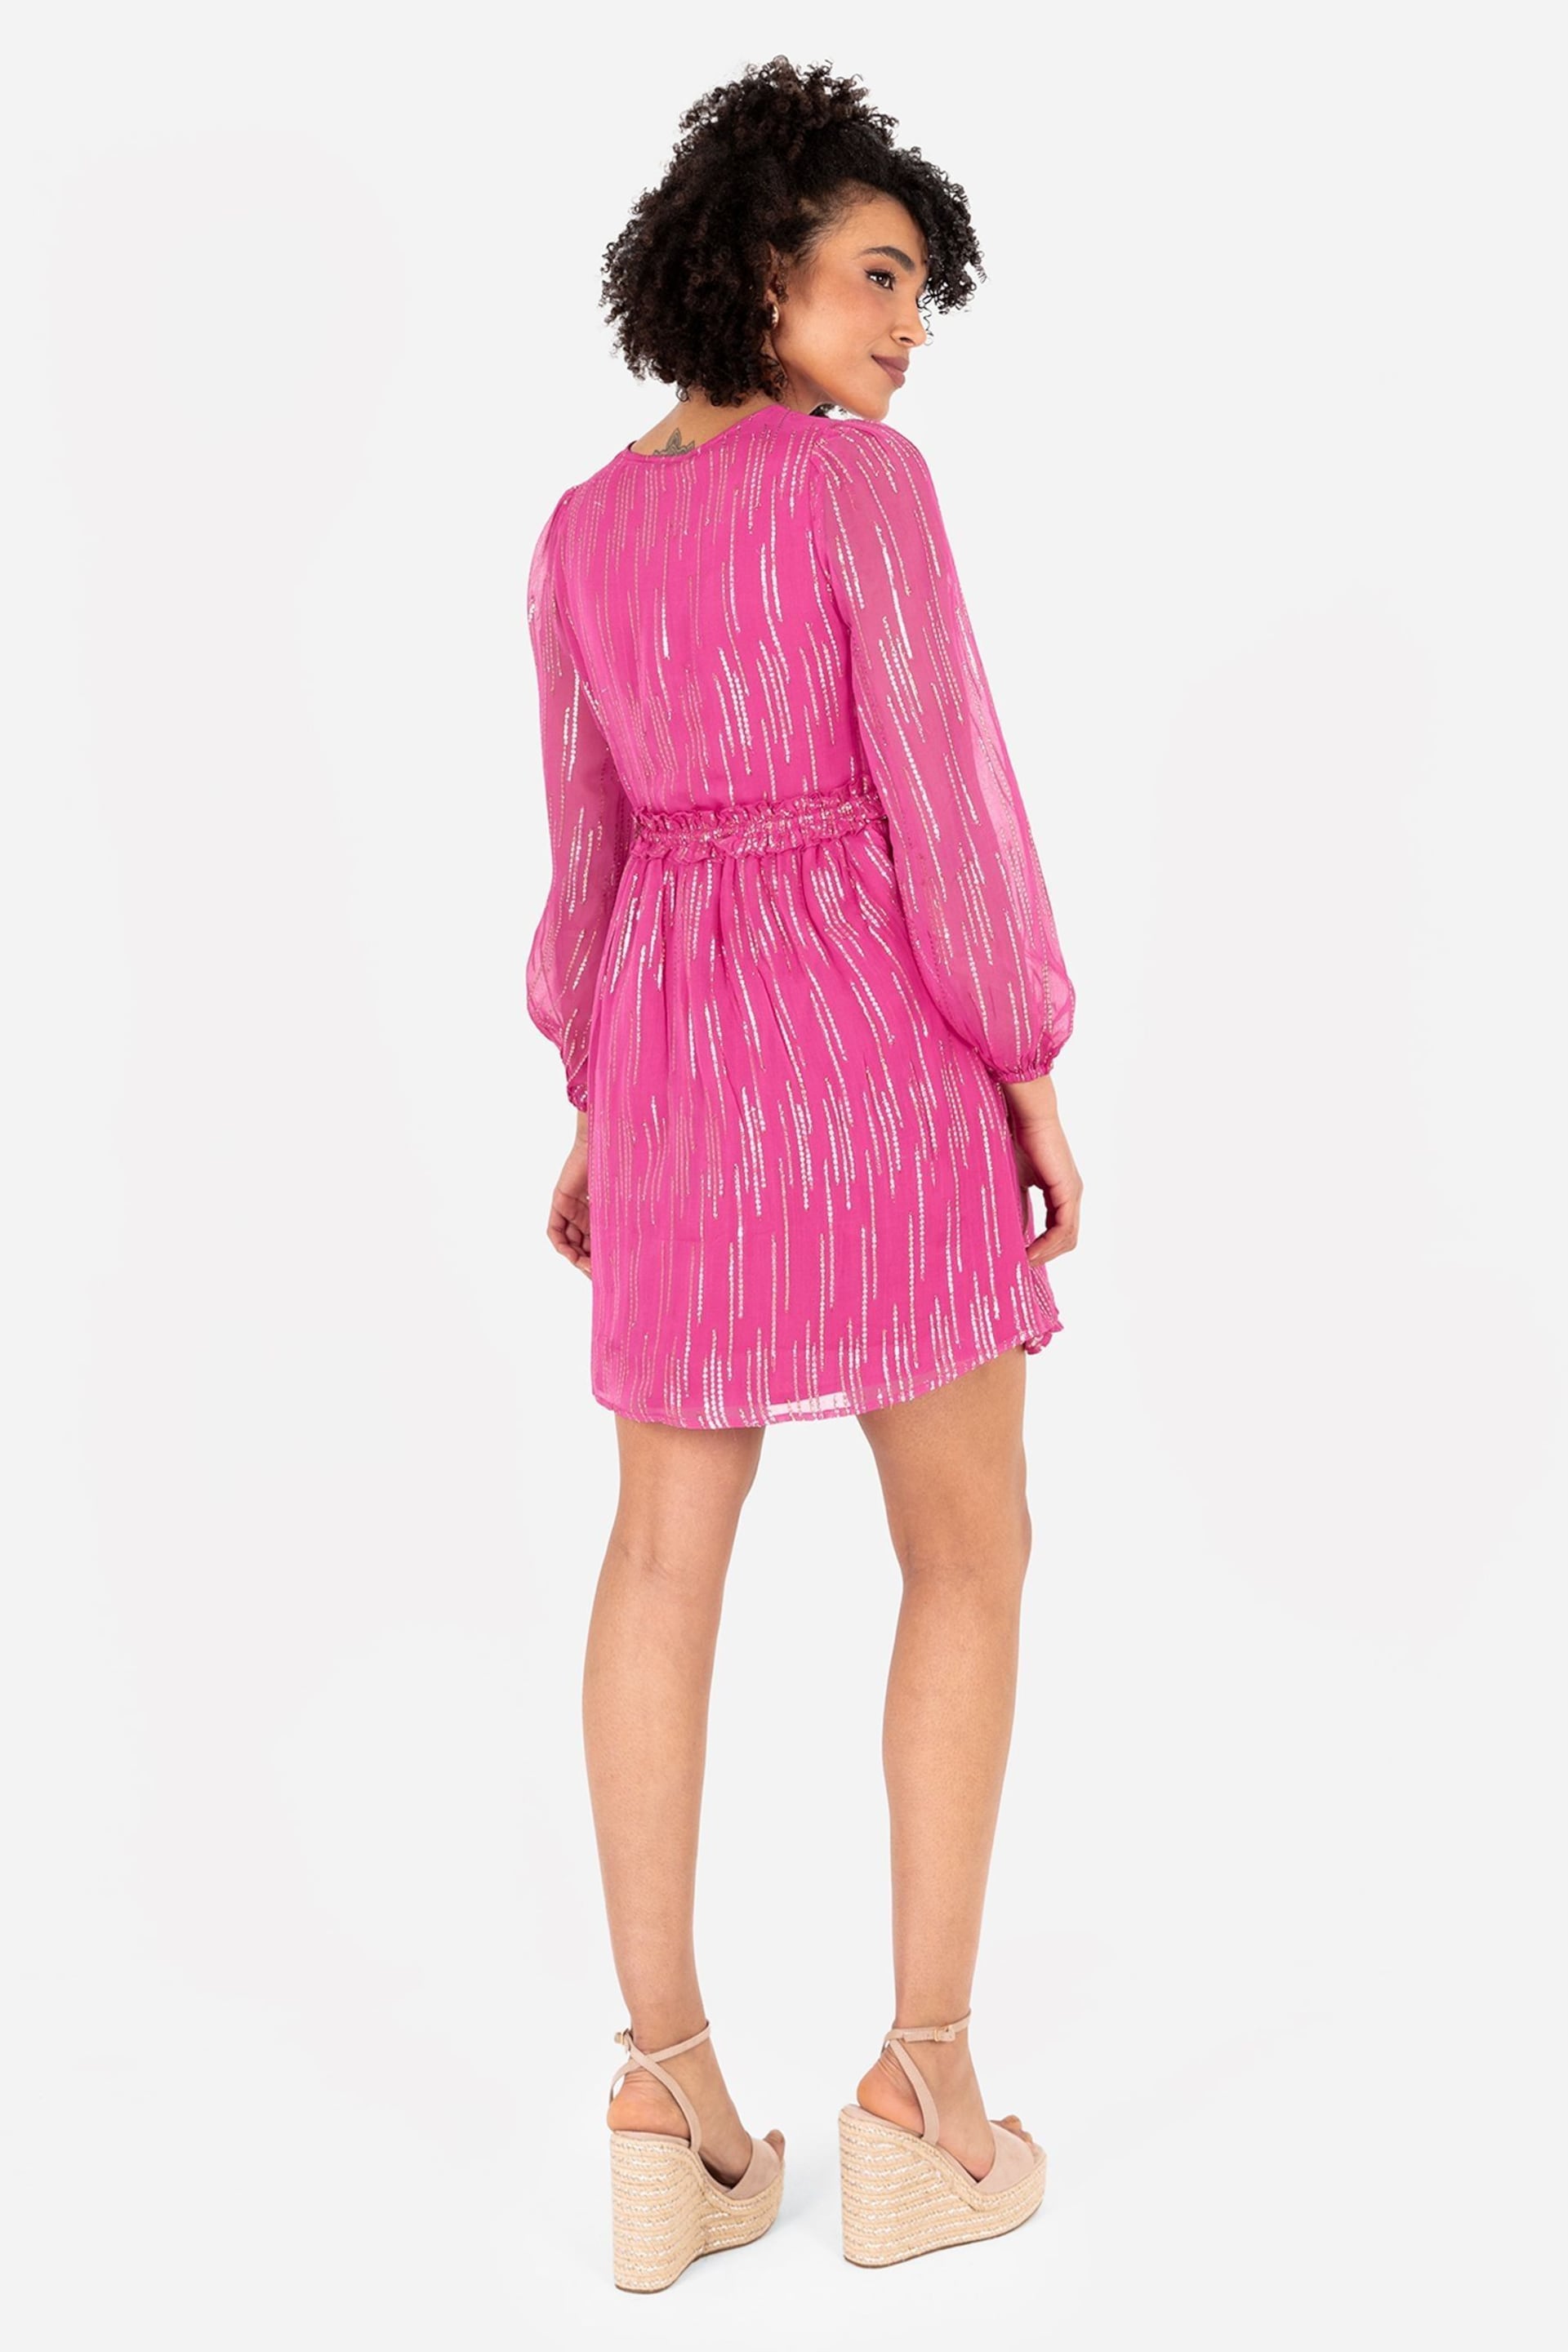 Lovedrobe Pink Balloon Sleeve Side Tie Mini Dress - Image 2 of 5